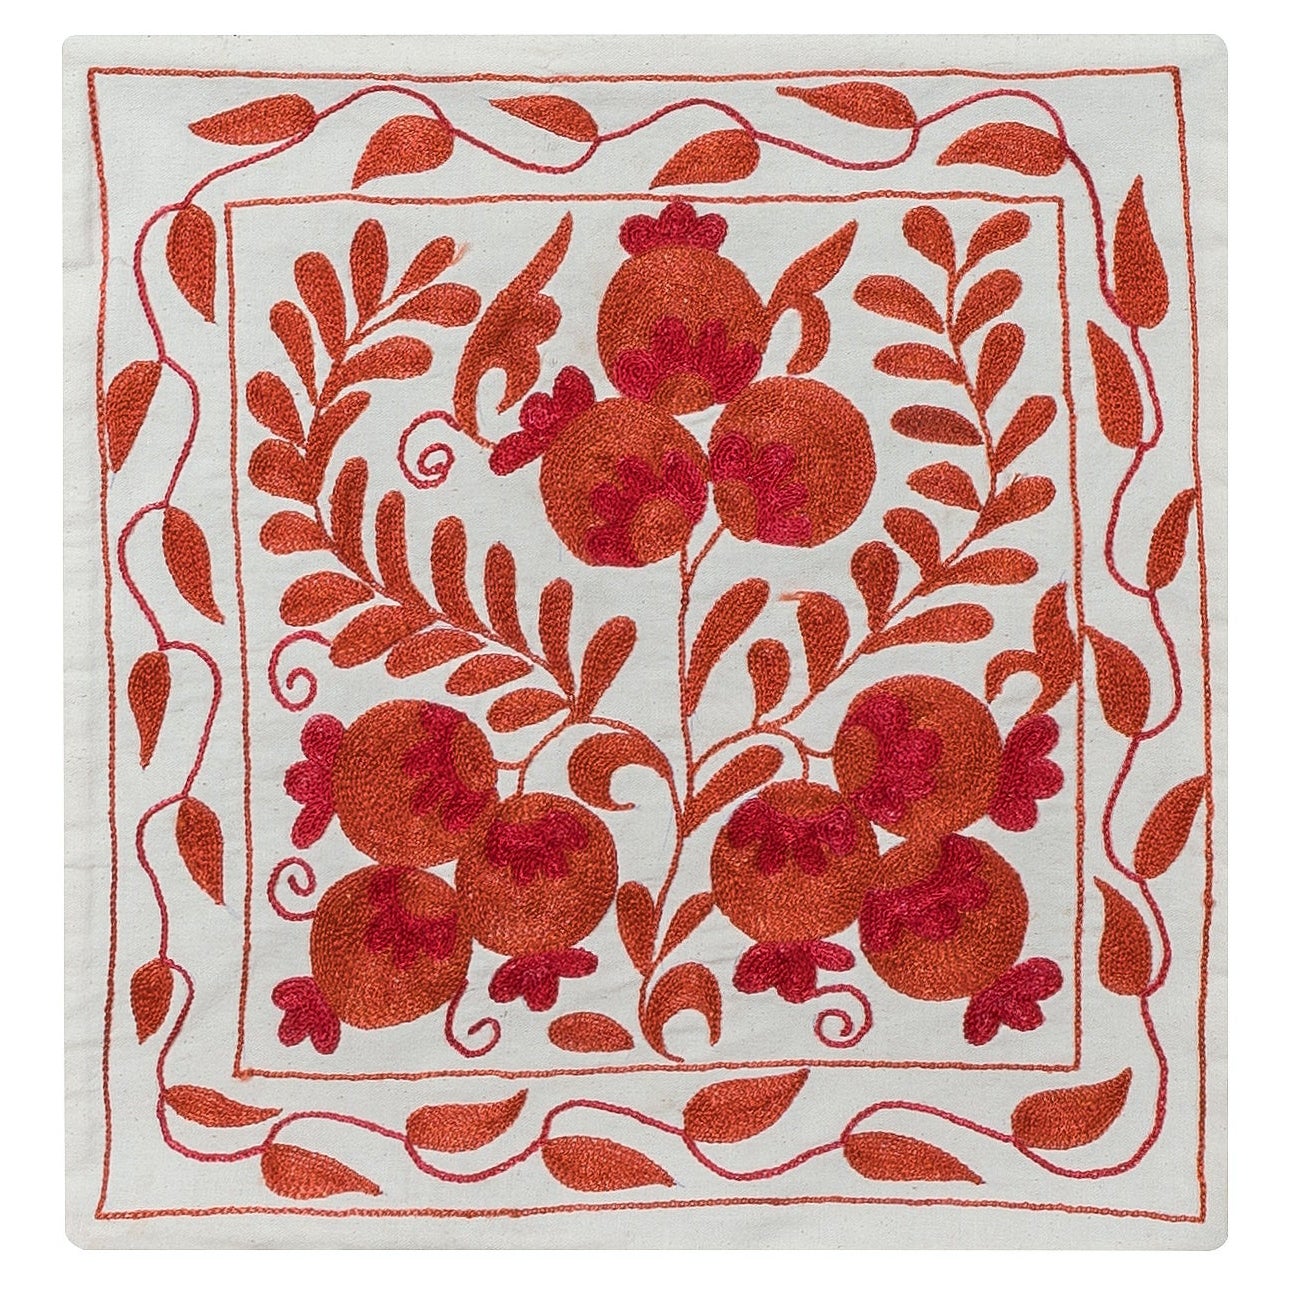 Contemporary Uzbek Hand Embroidered Silk Suzani Cushion Cover in Red & Cream